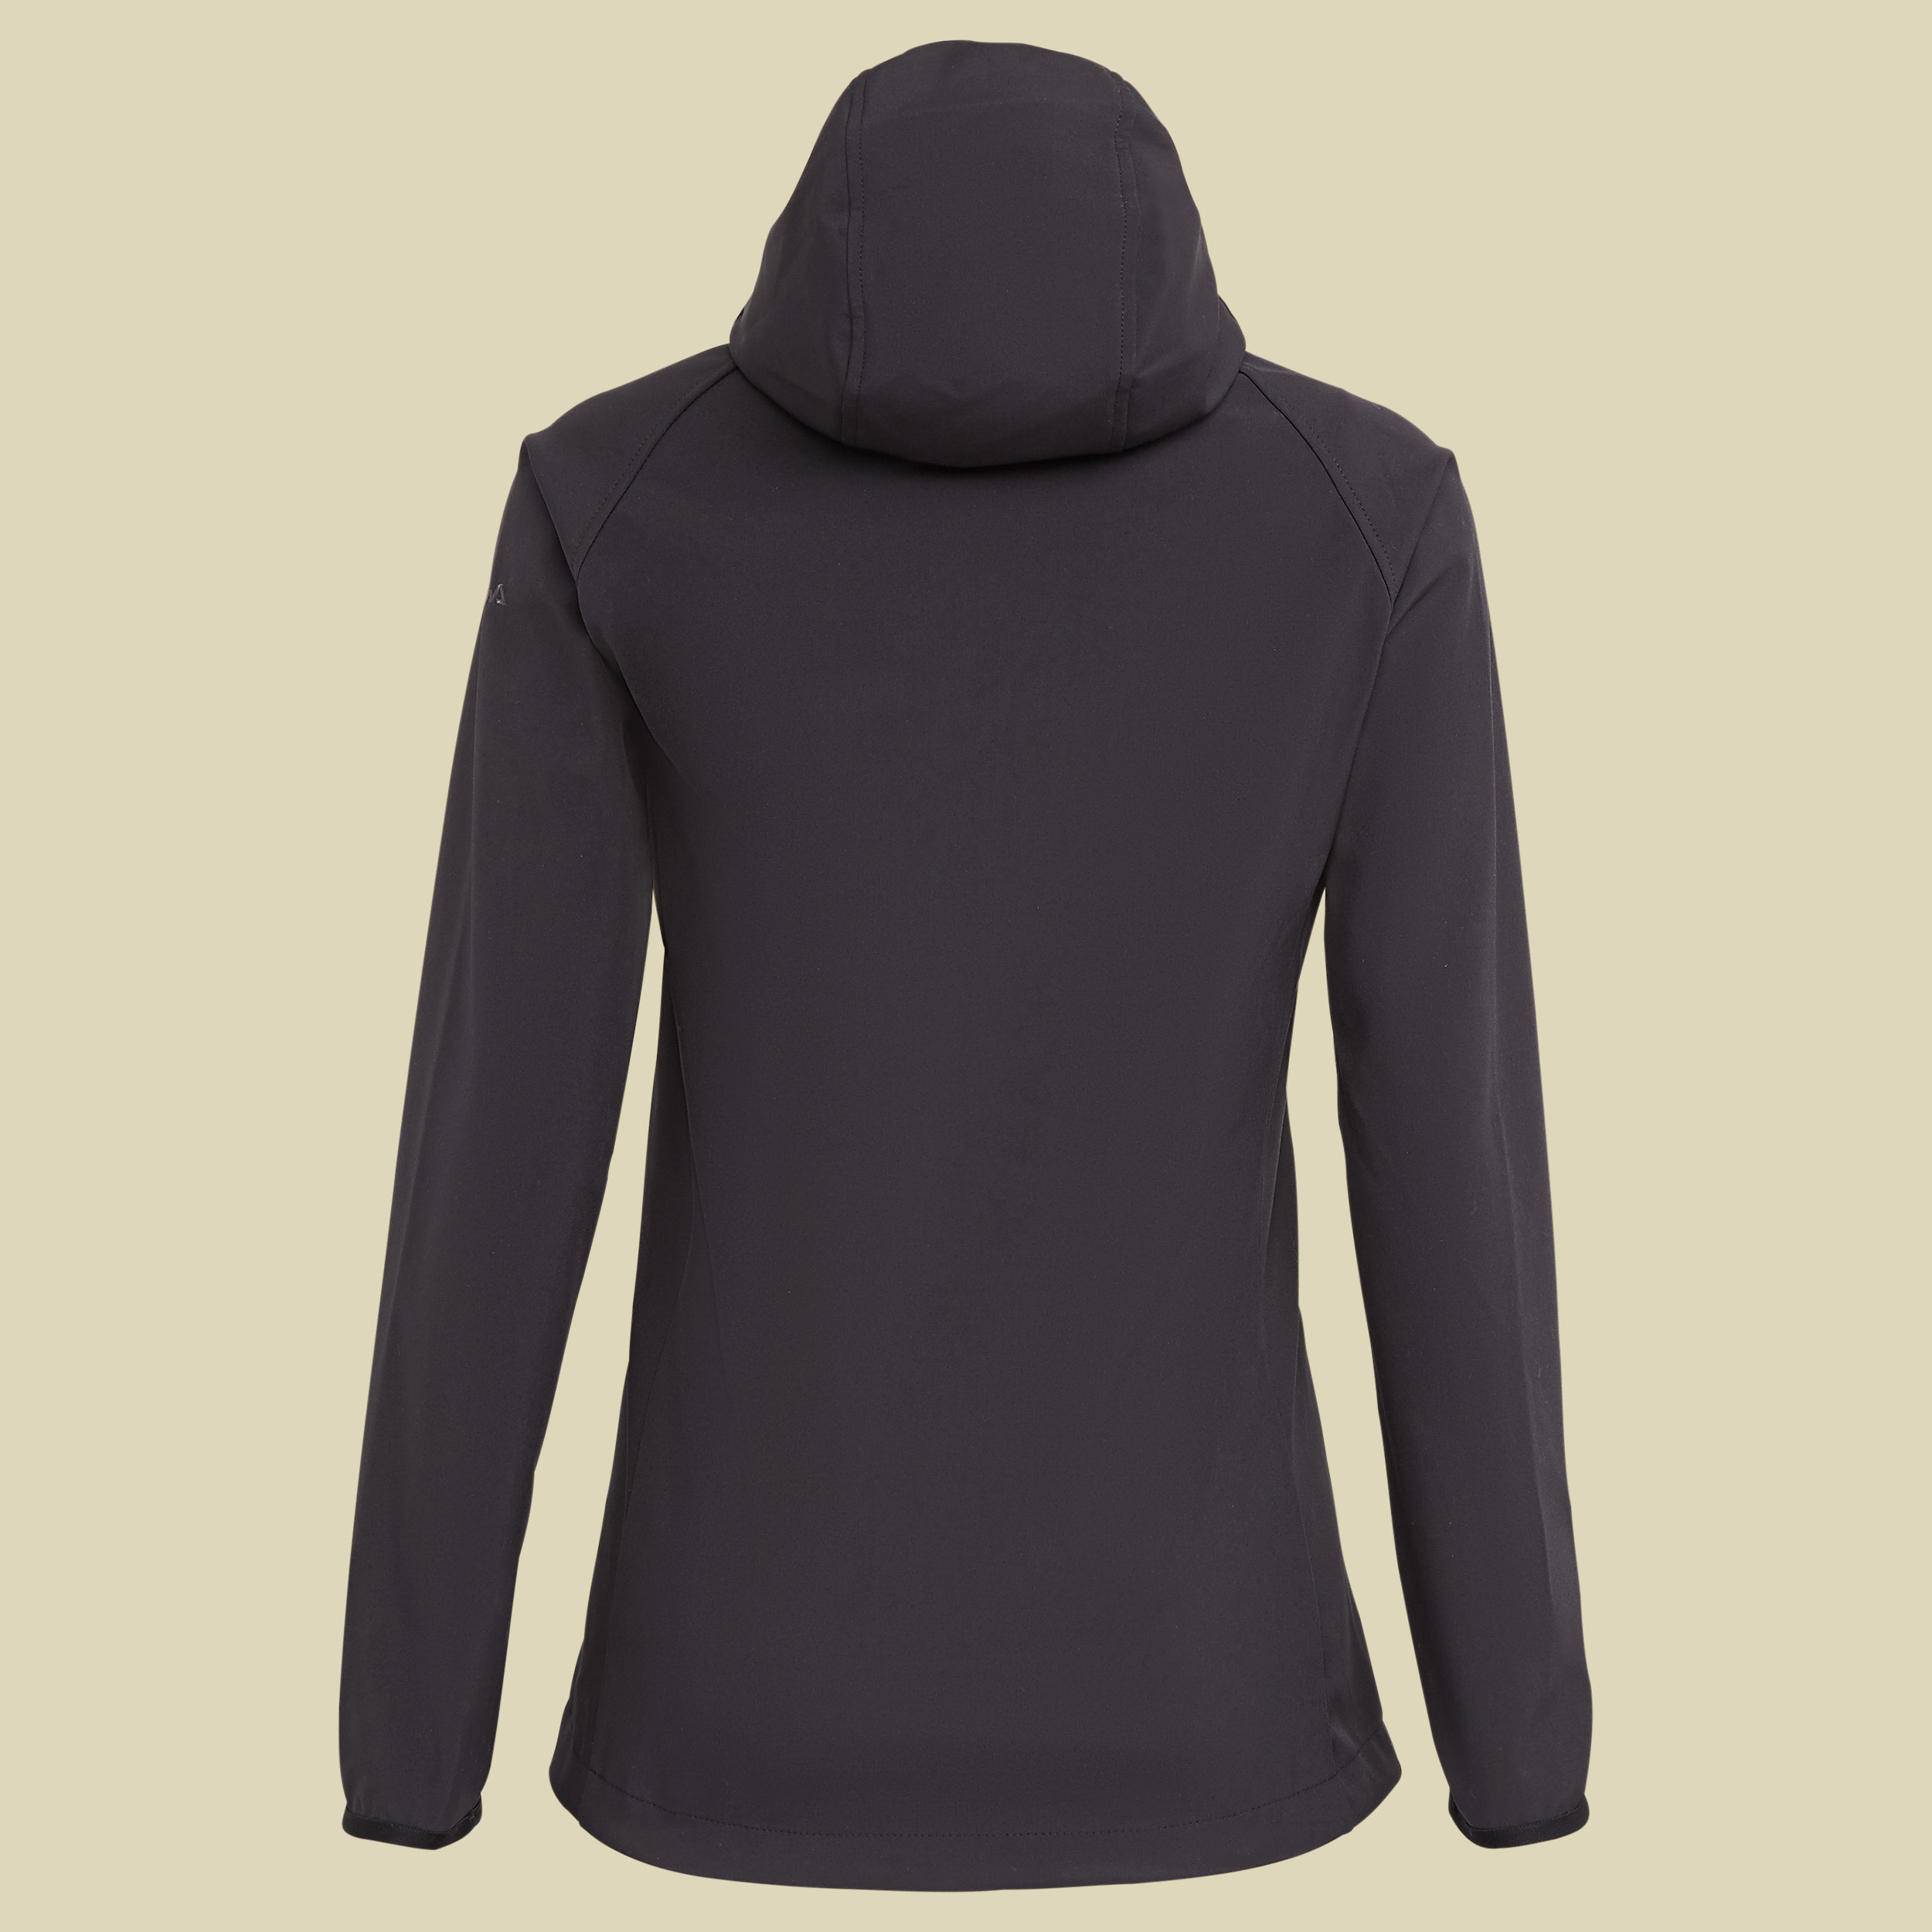 Cesana 2 Stormwall Softshell Jacket Women Größe 40 Farbe black out